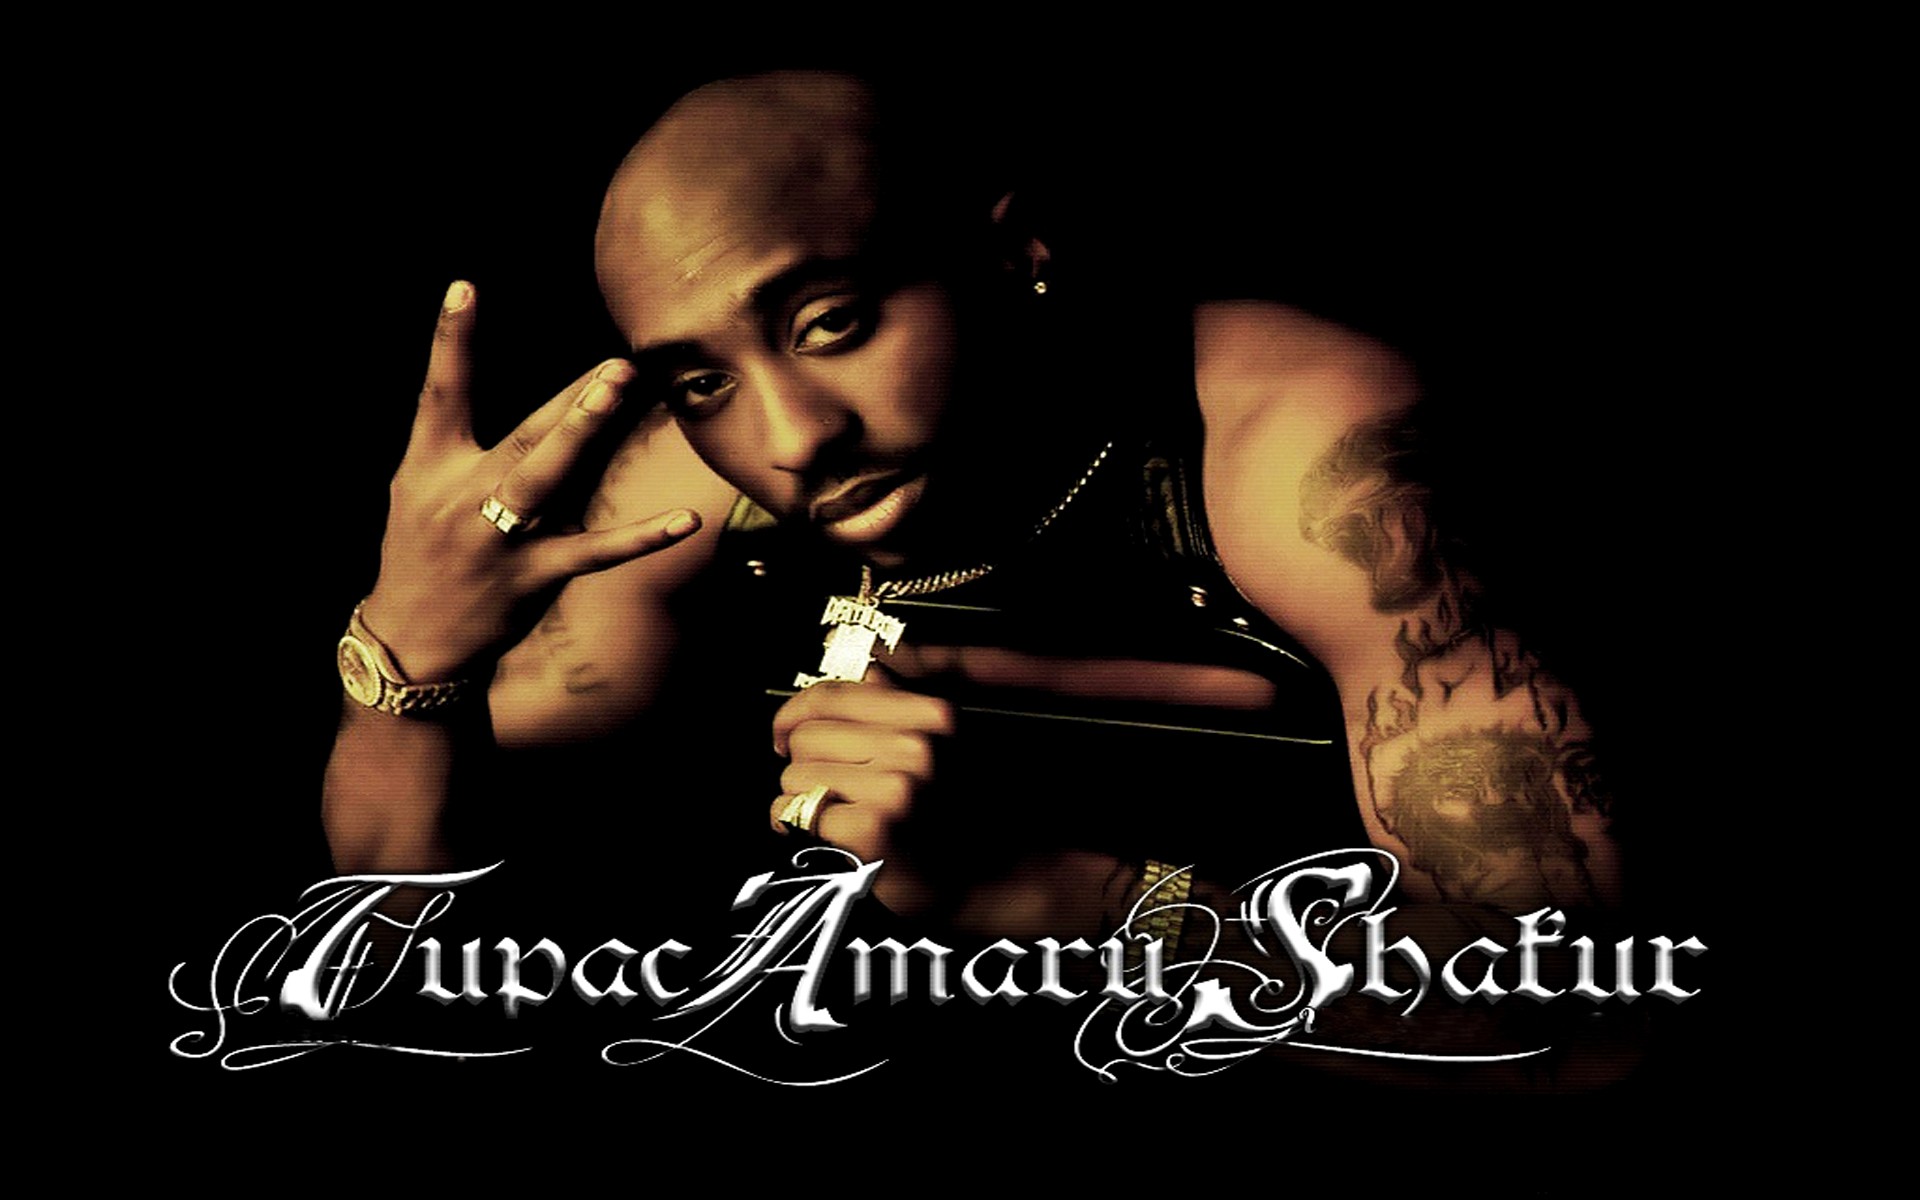 Tupac rap gangsta g wallpaper 1920x1200 45913 WallpaperUP 1920x1200